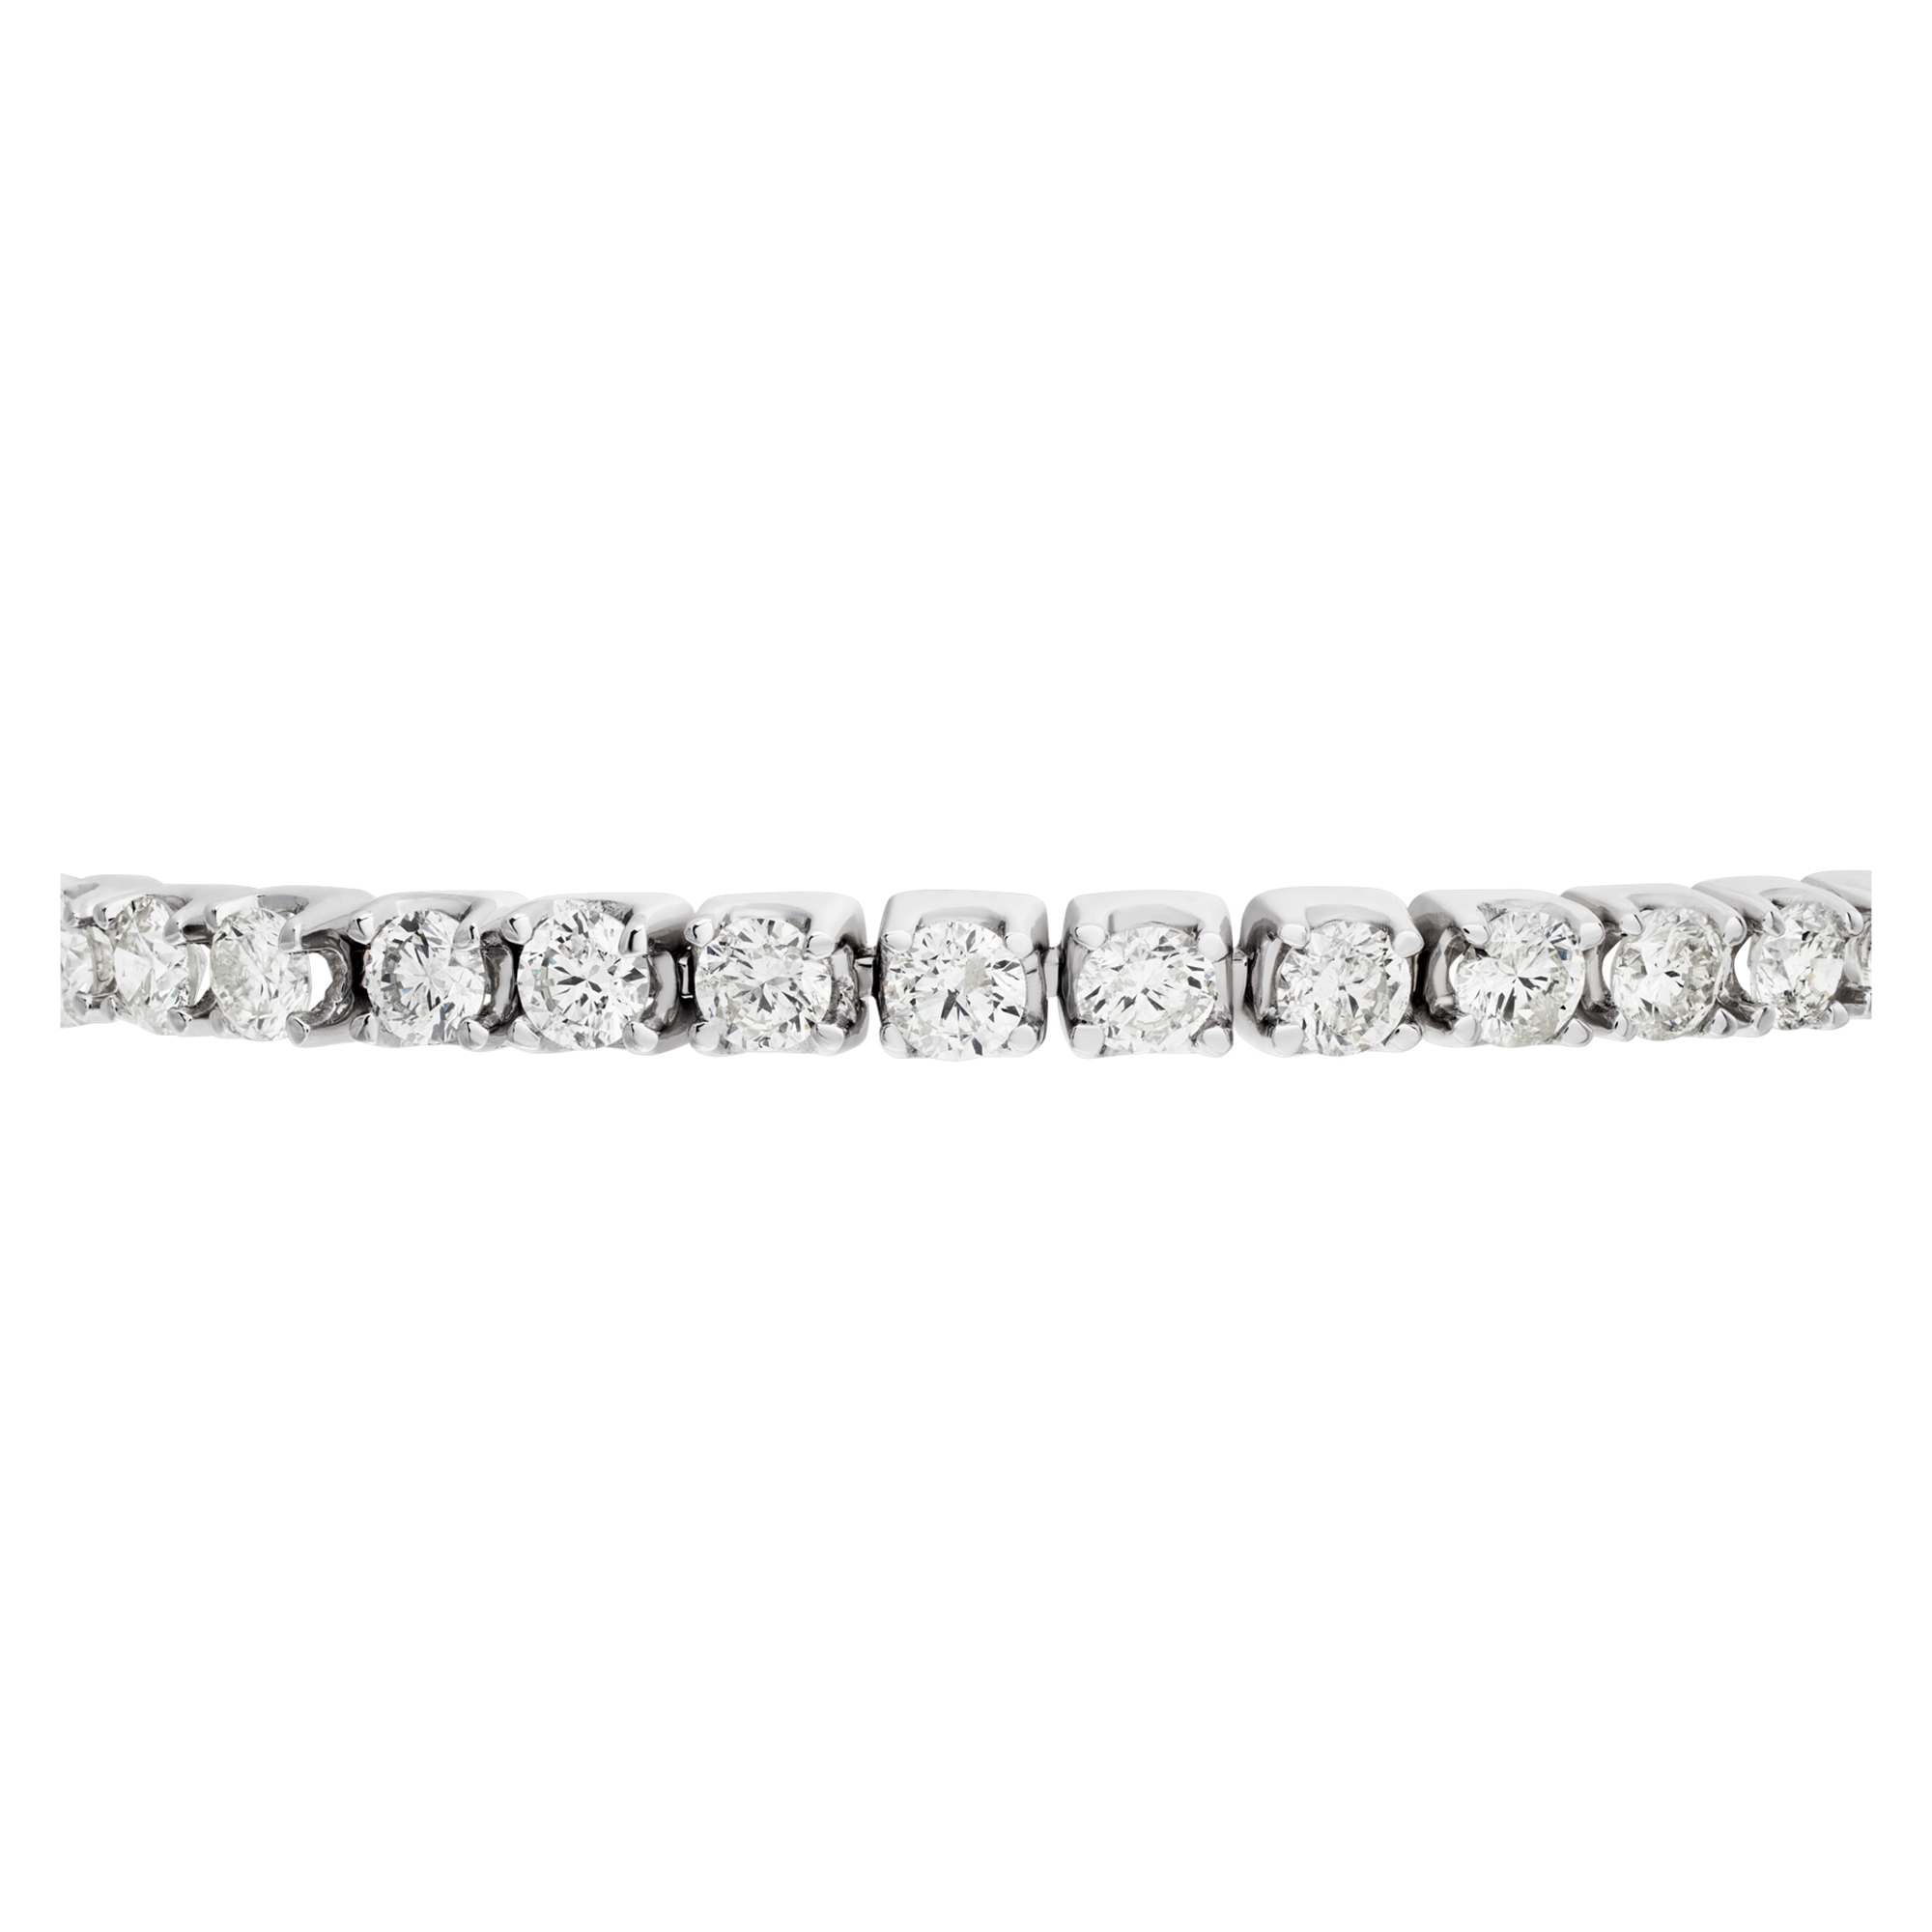 Sparkling line diamond bracelet with 8.09 carat full cut round diamonds set in 14K white gold image 2